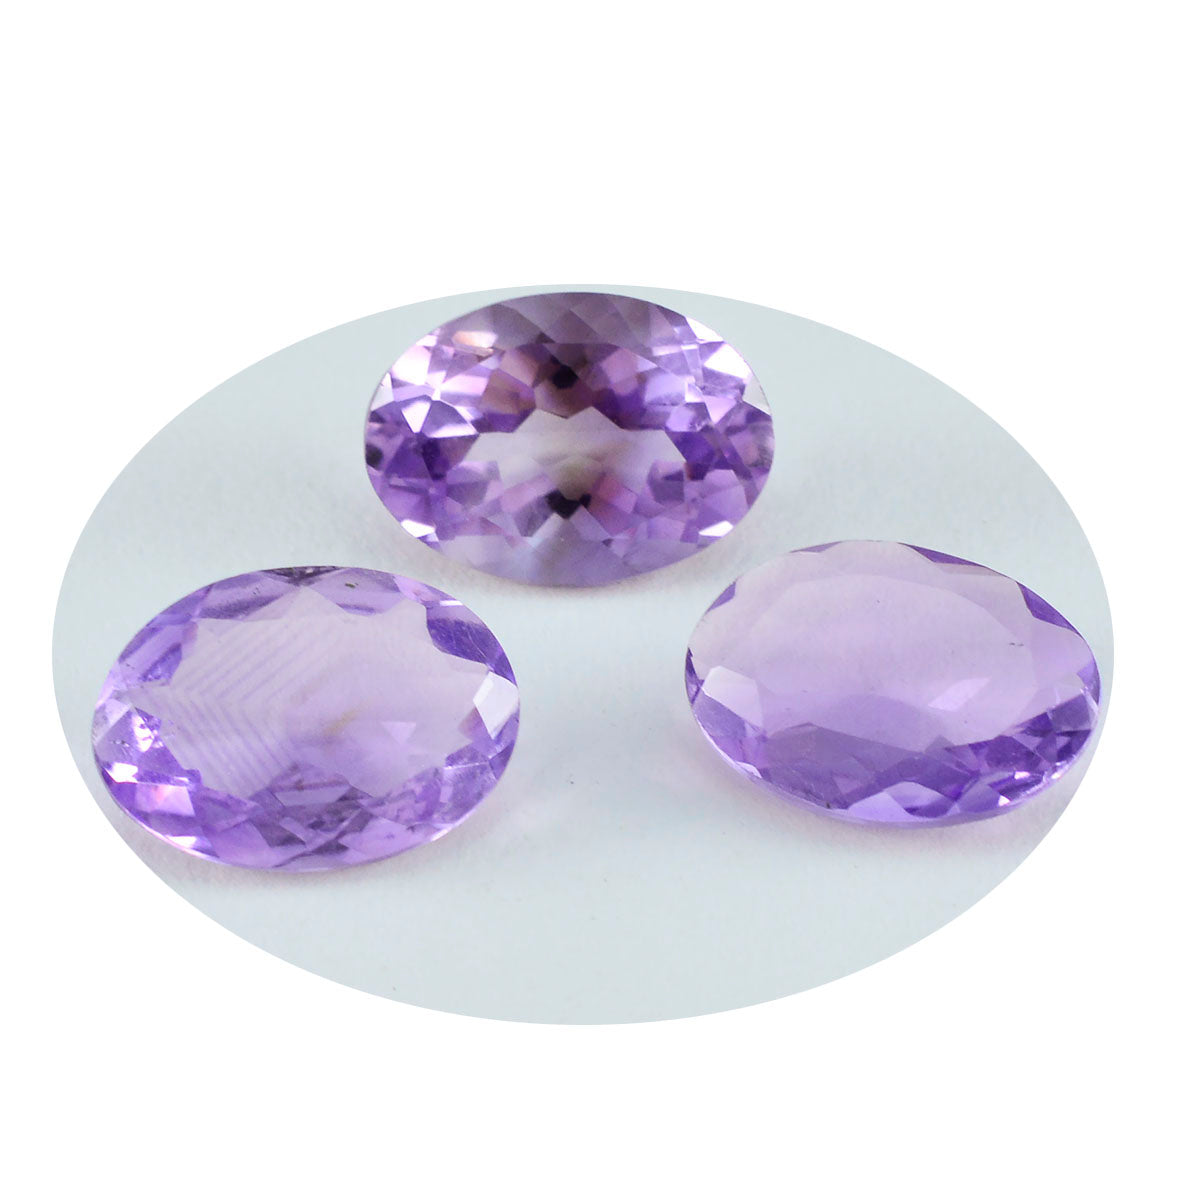 Riyogems 1PC Real Purple Amethyst Faceted 10x12 mm Oval Shape beautiful Quality Loose Gem